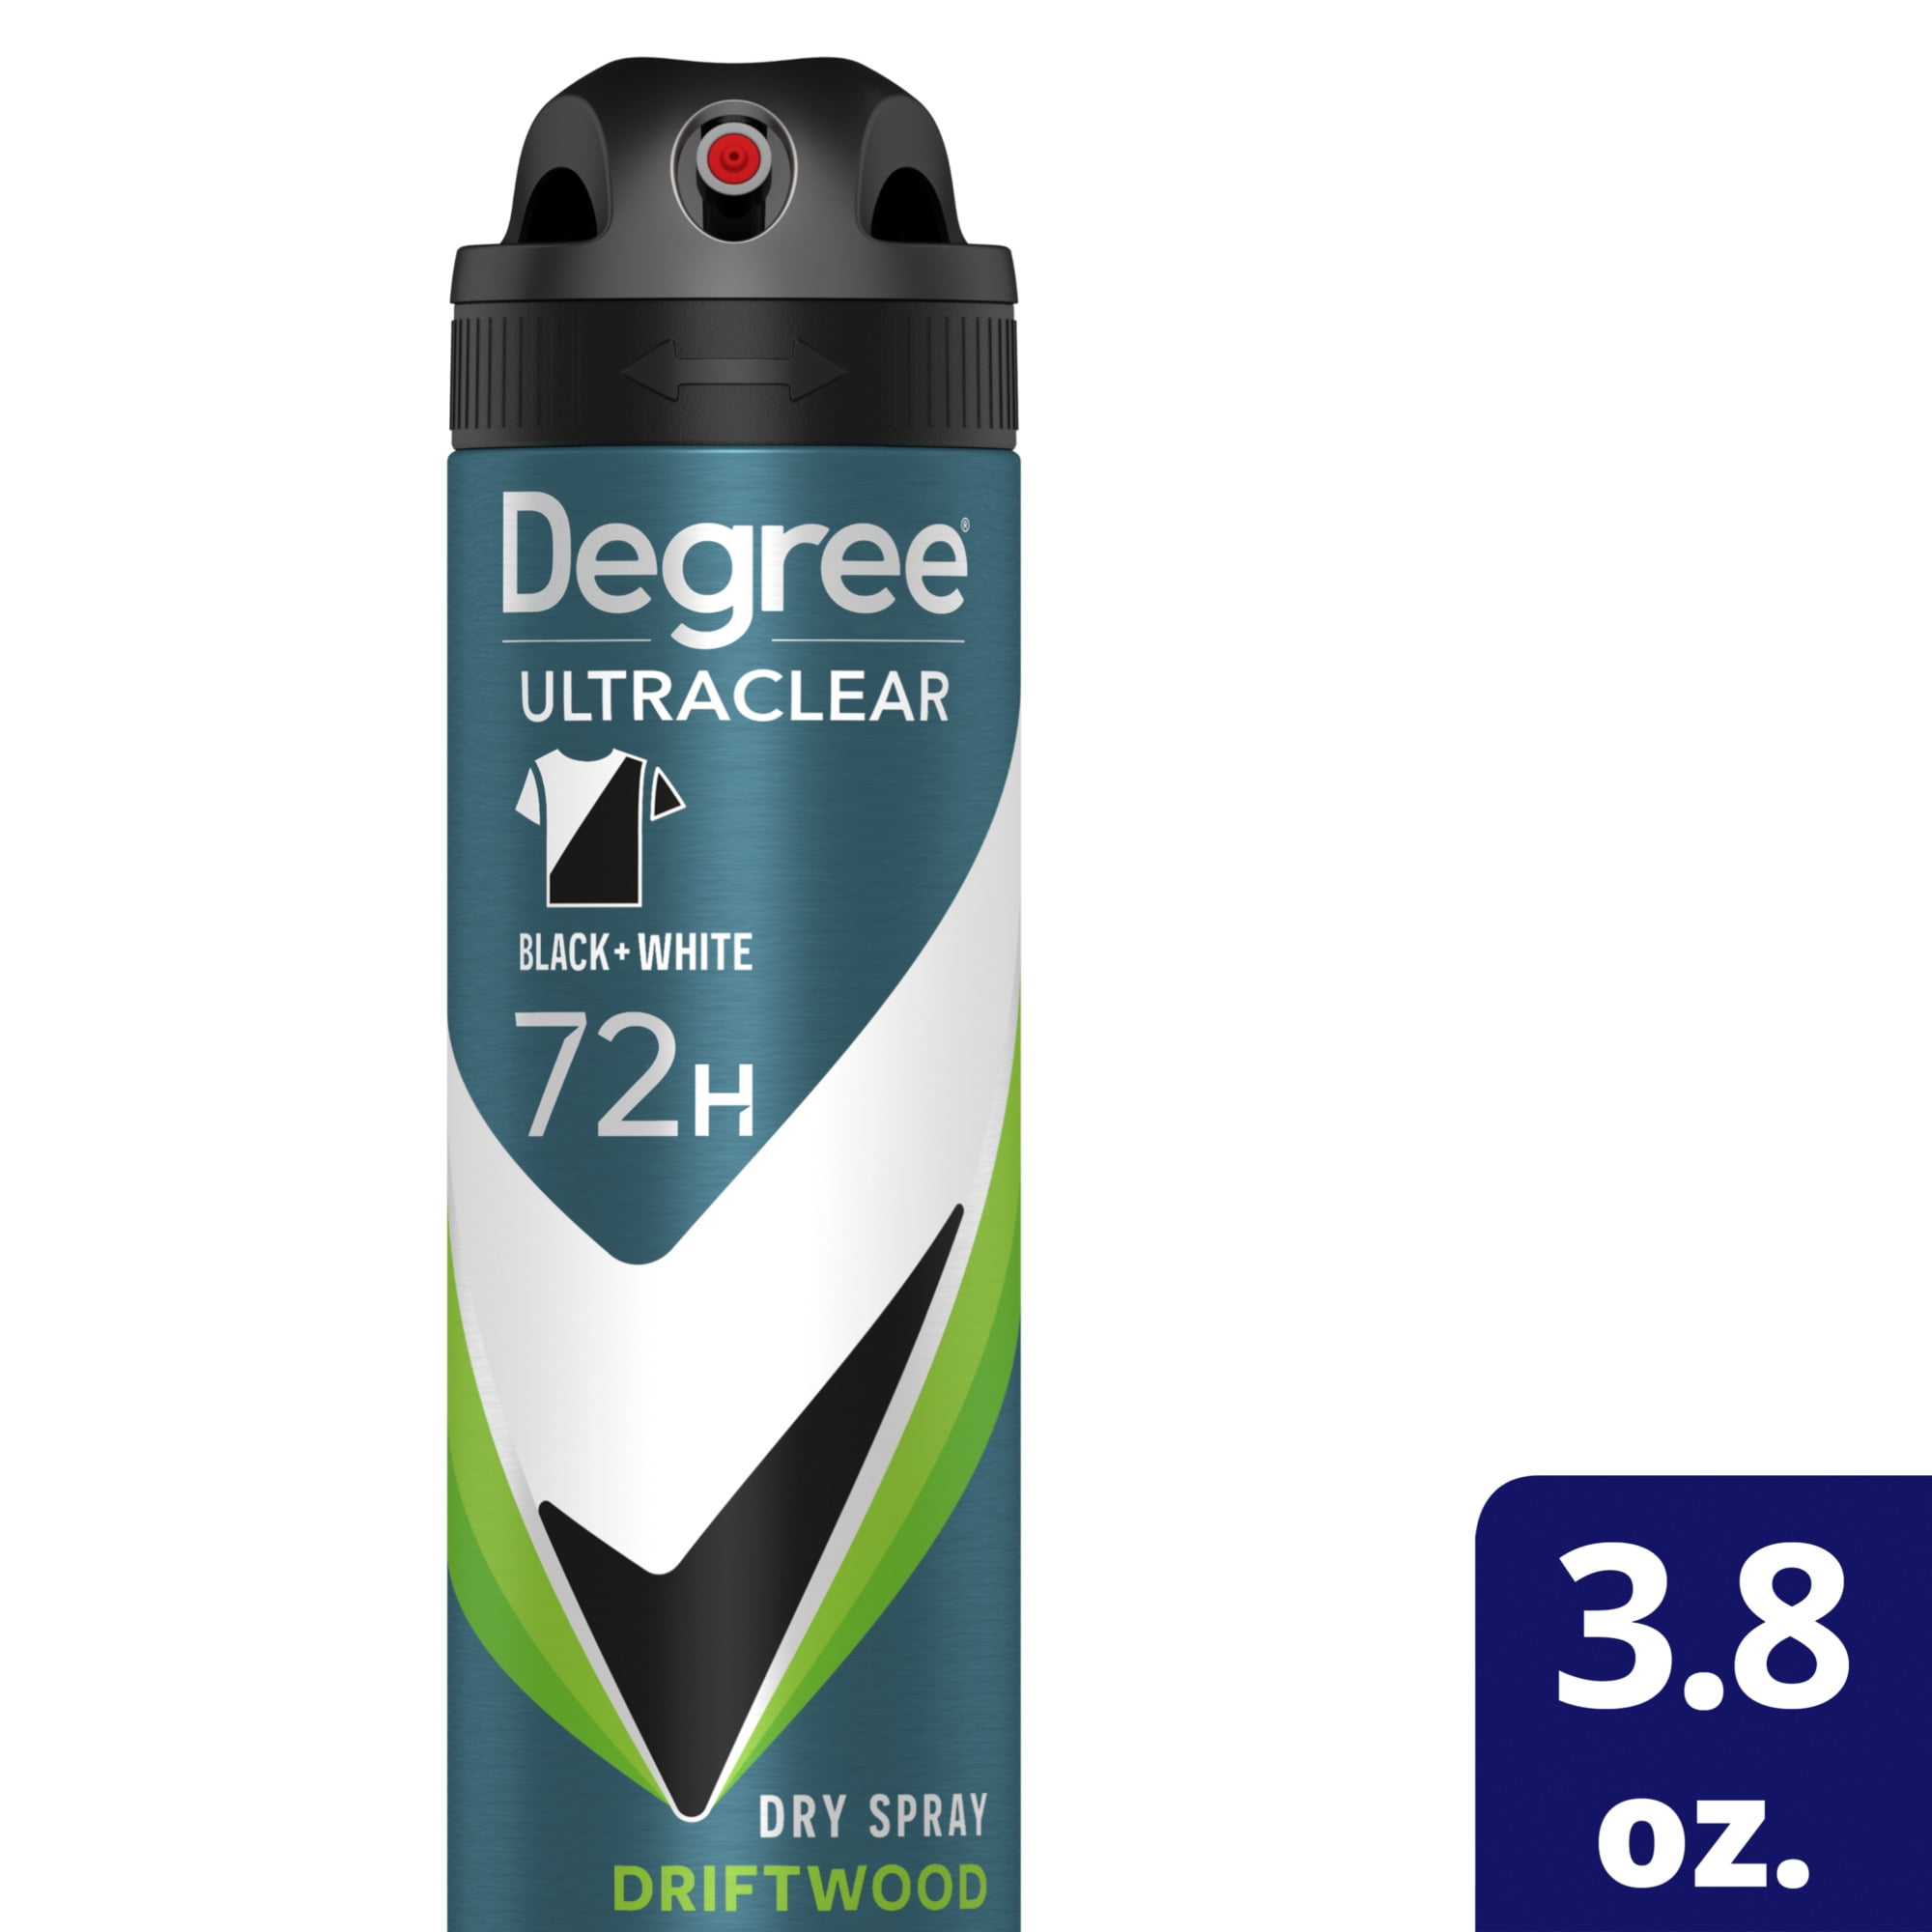 Degree Men UltraClear 72H Antiperspirant Deodorant Black+White, 3.8 oz